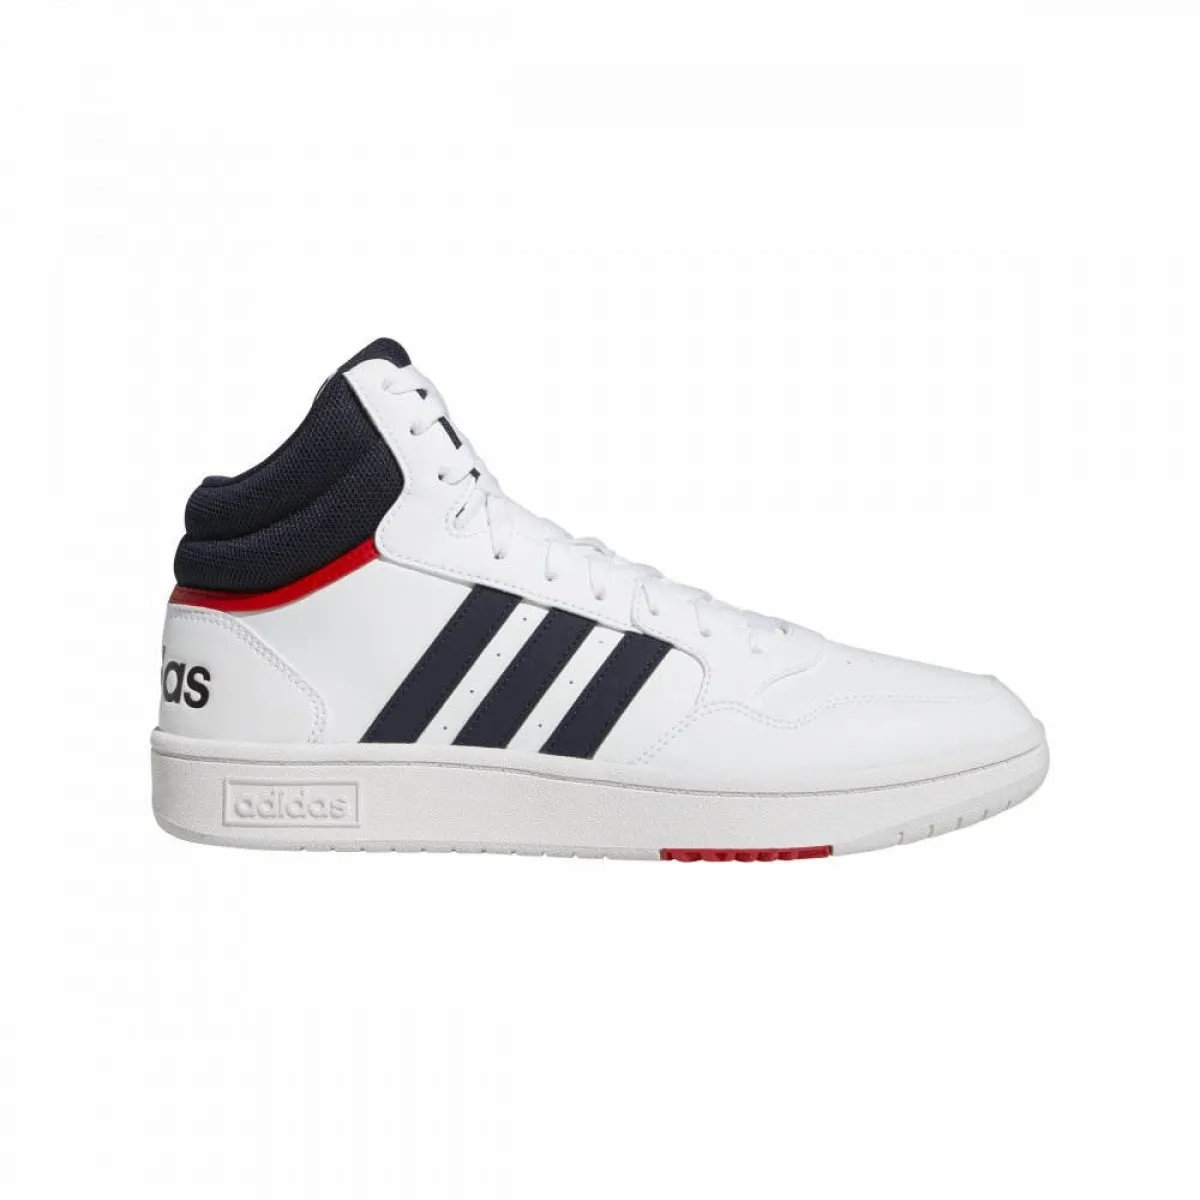 adidas sportssko HOOPS 3.0 MID hvid sort rød 12-adiGY5543